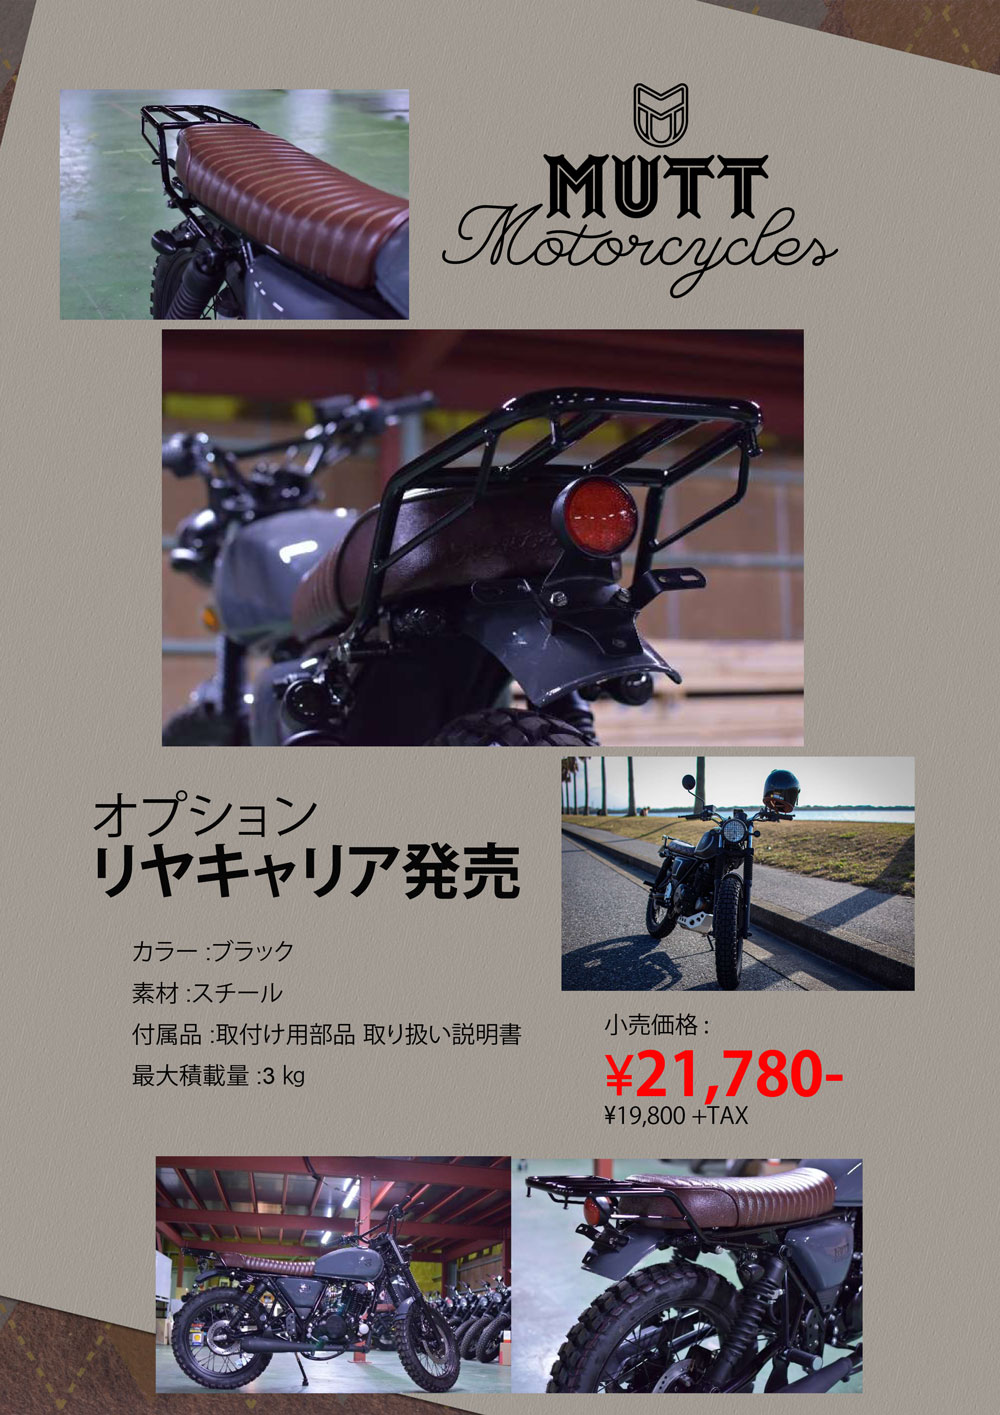 Mutt Motorcycles リヤキャリア発売します カワサキ Ktm バイク 逆輸入 東京 八王子市 東村山市 フリーダムナナ